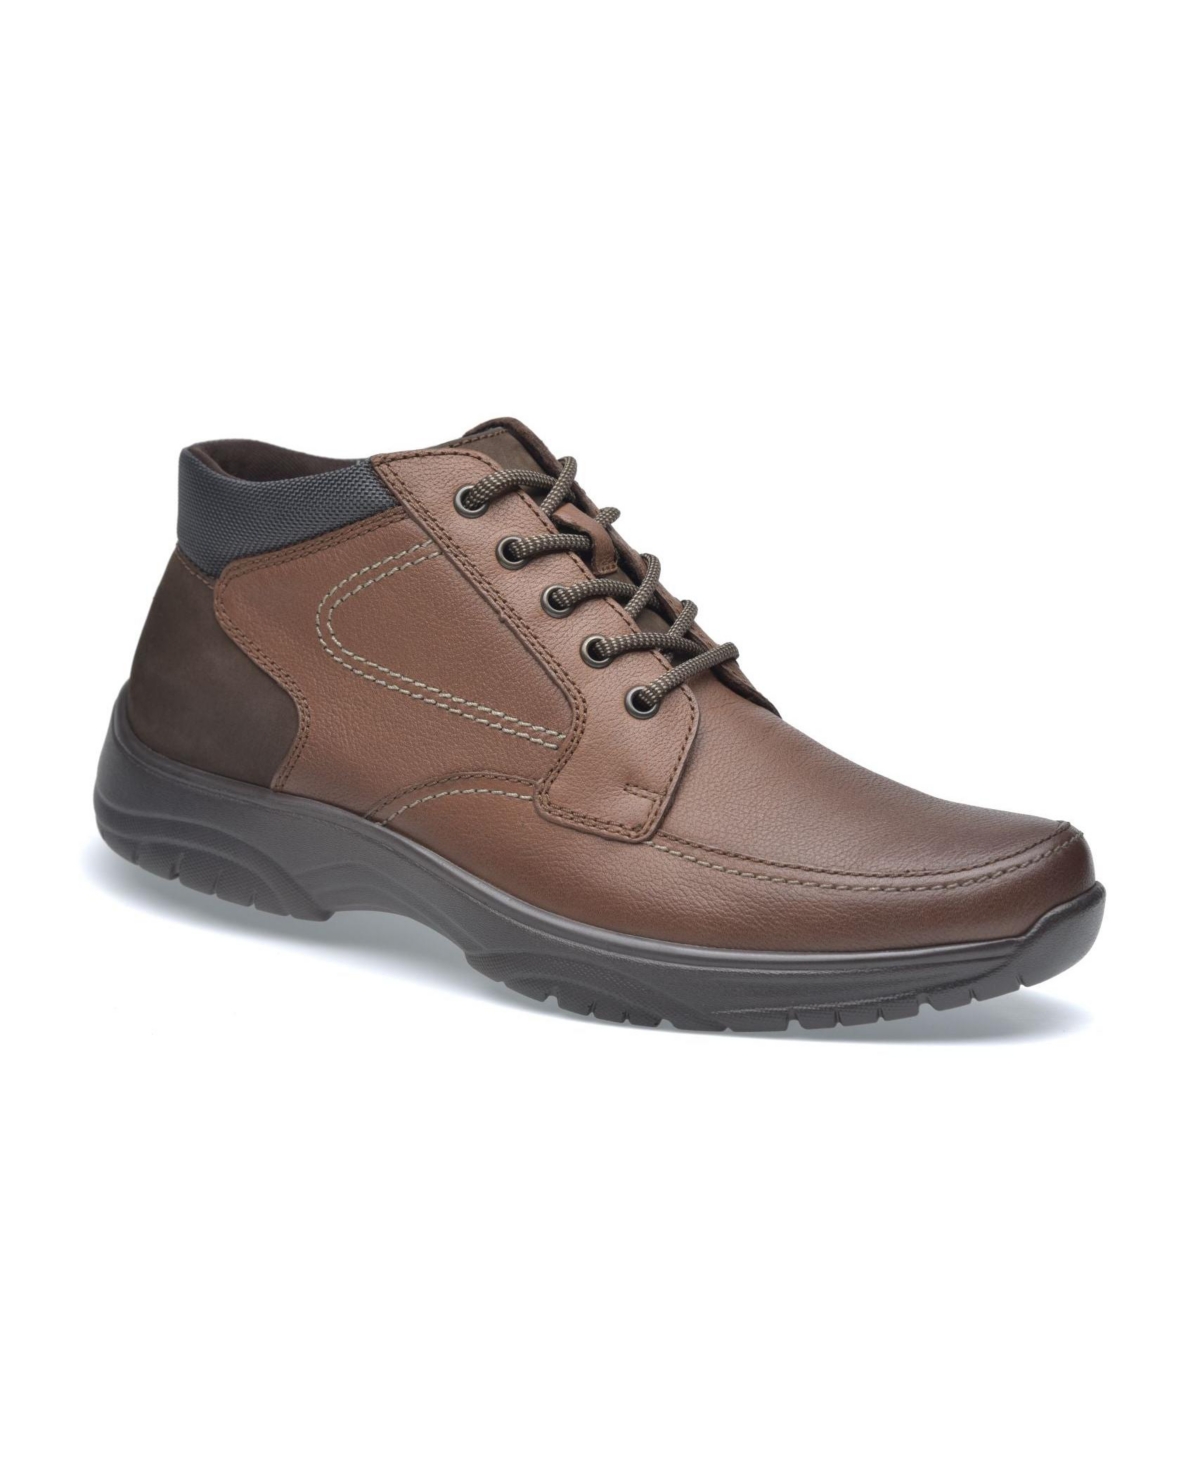 Men's Premium Comfort Leather Low Ankle Boots - Black